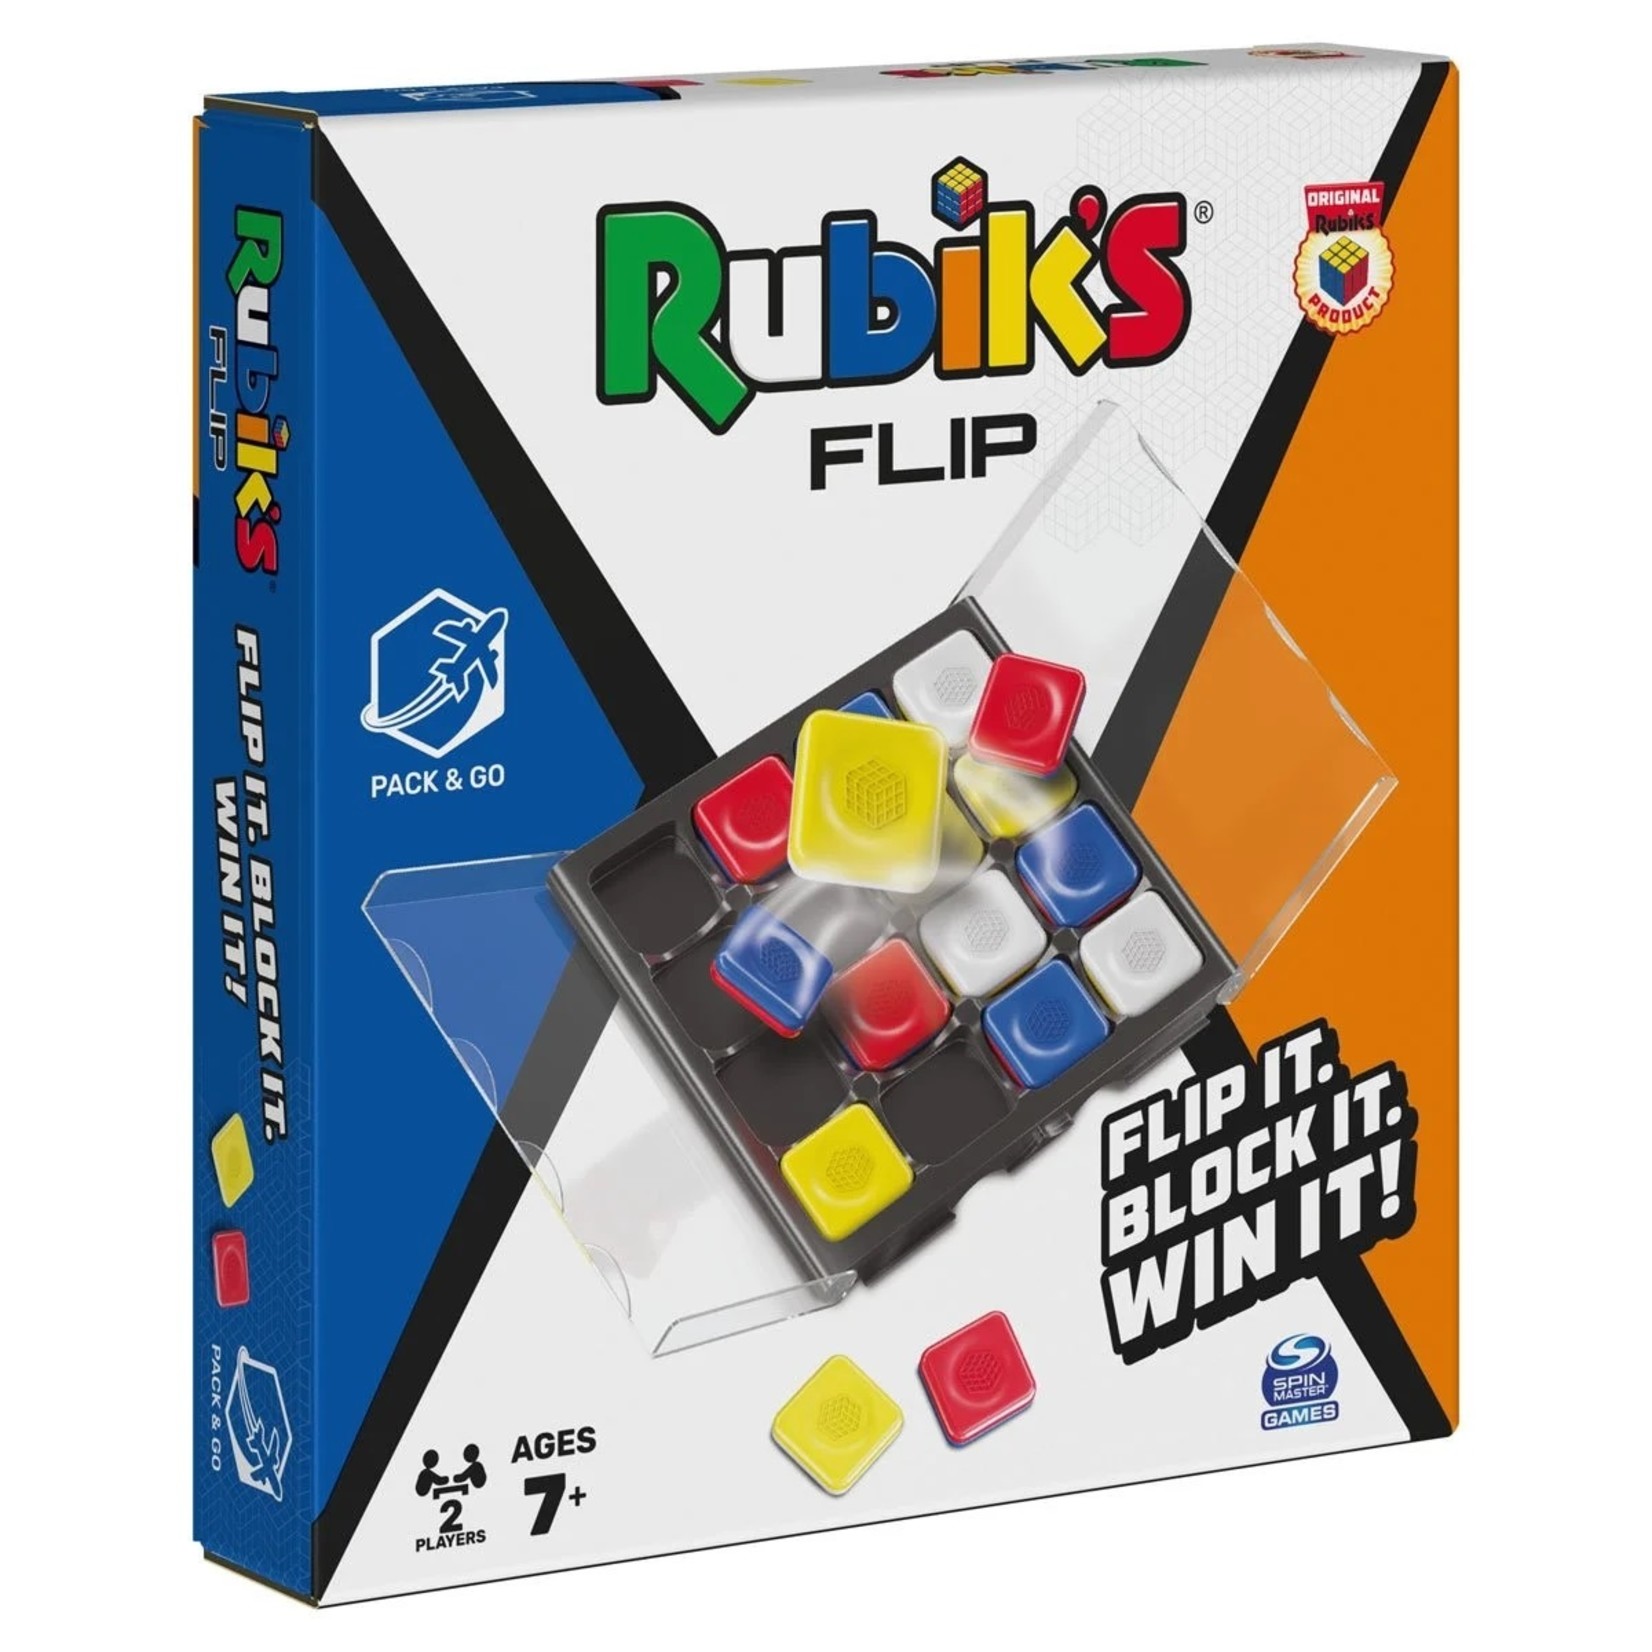 Spinmaster Rubik's Flip Pack N Go Game